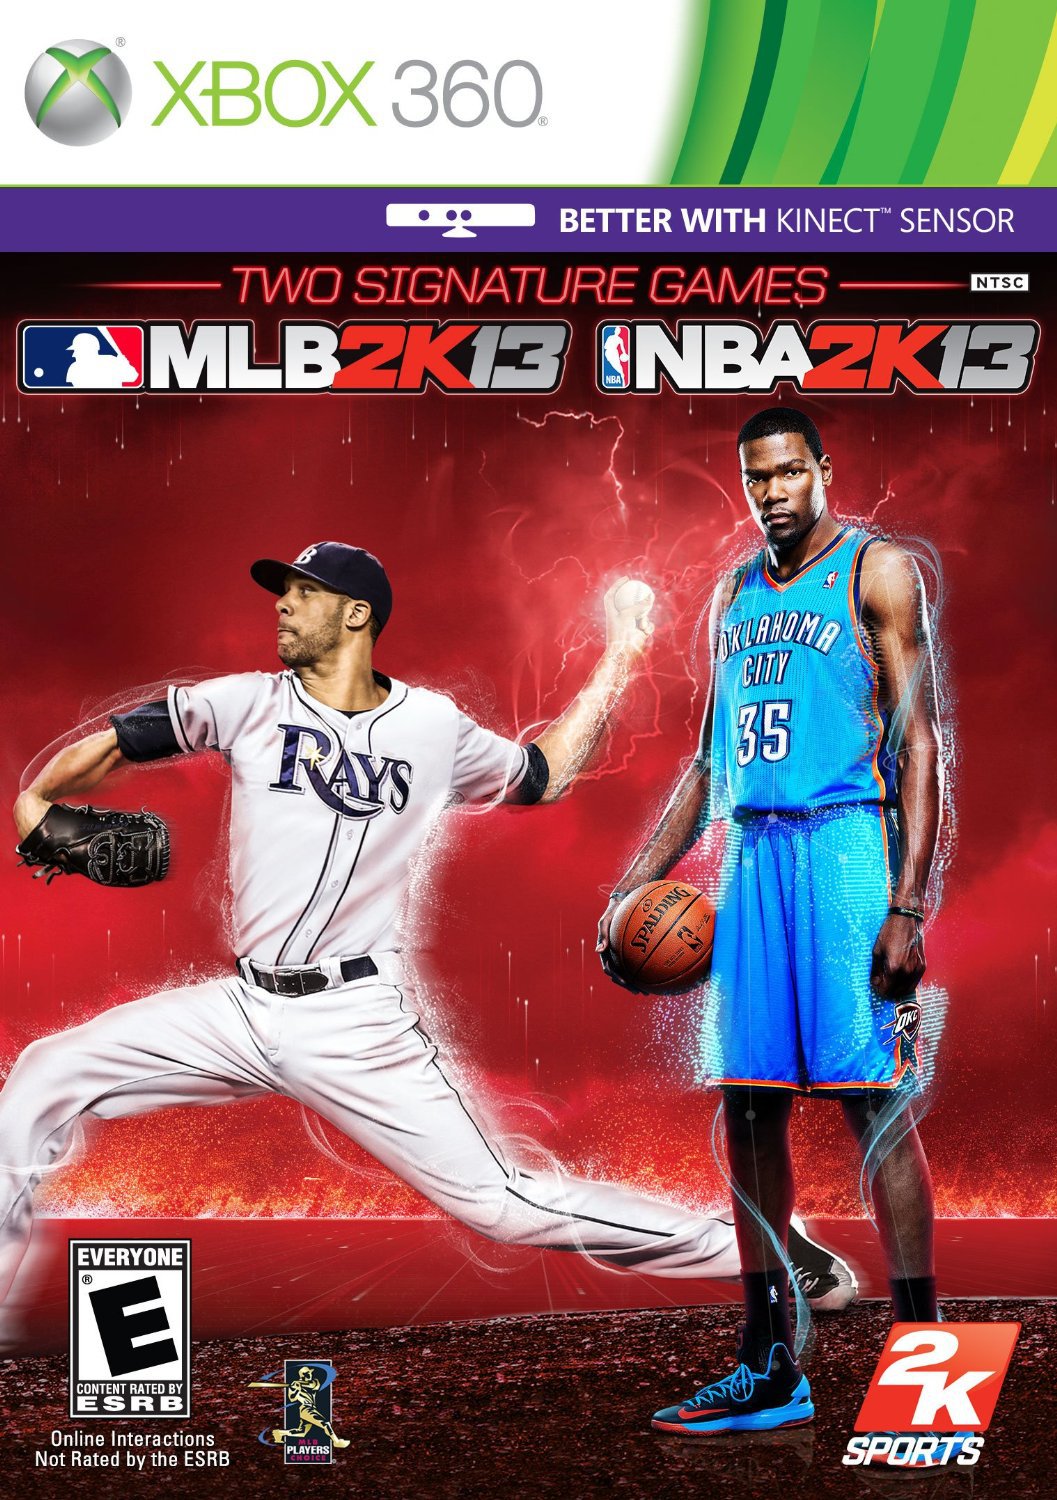 MLB 2K13 & NBA 2K13